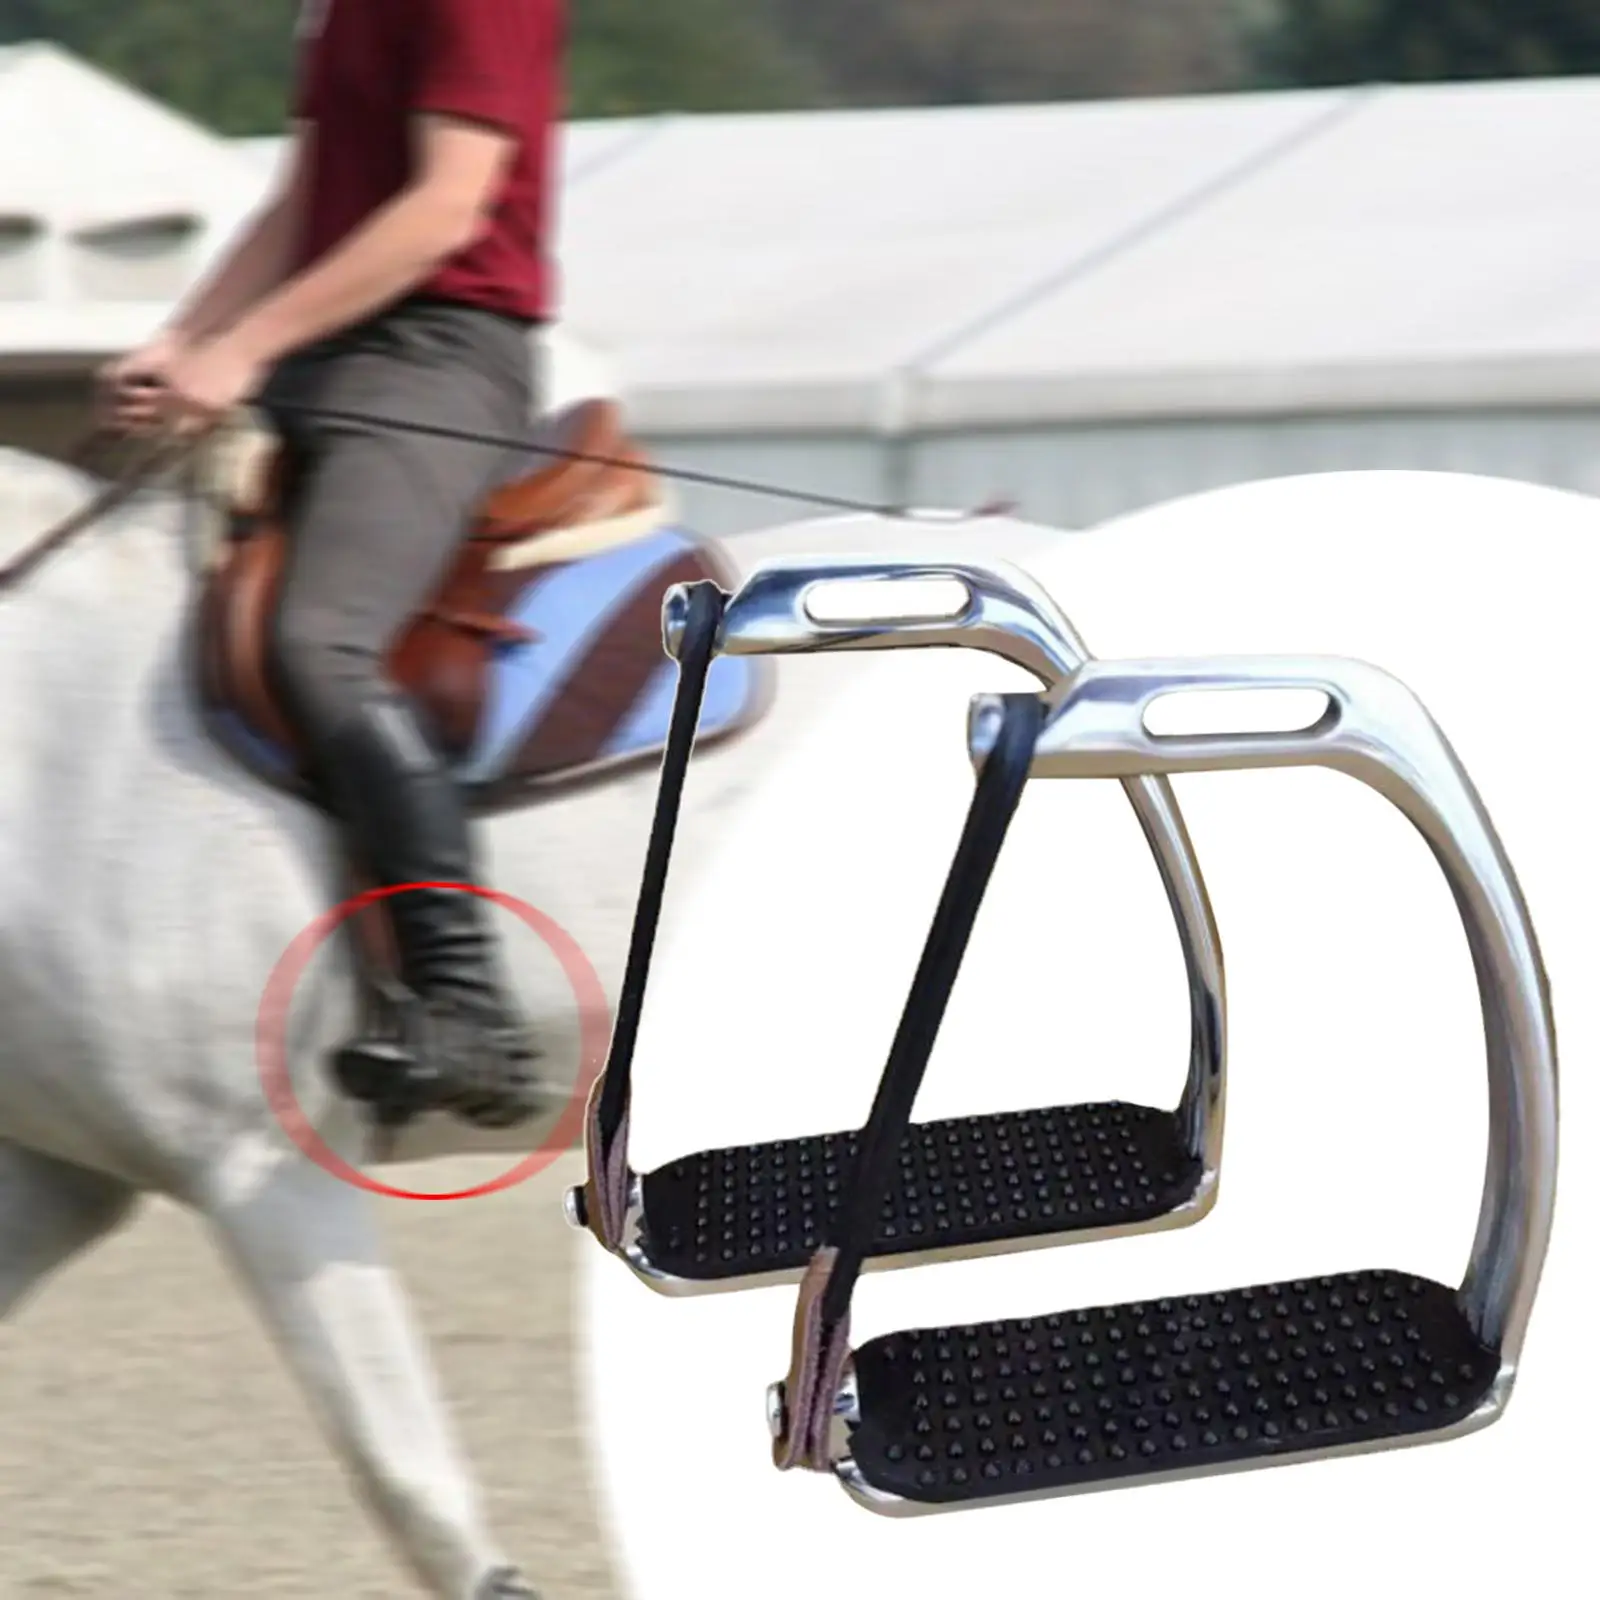 2x Horse Riding Stirrups Training Tool, Non Slip Rubber Pad, English Riding Hose